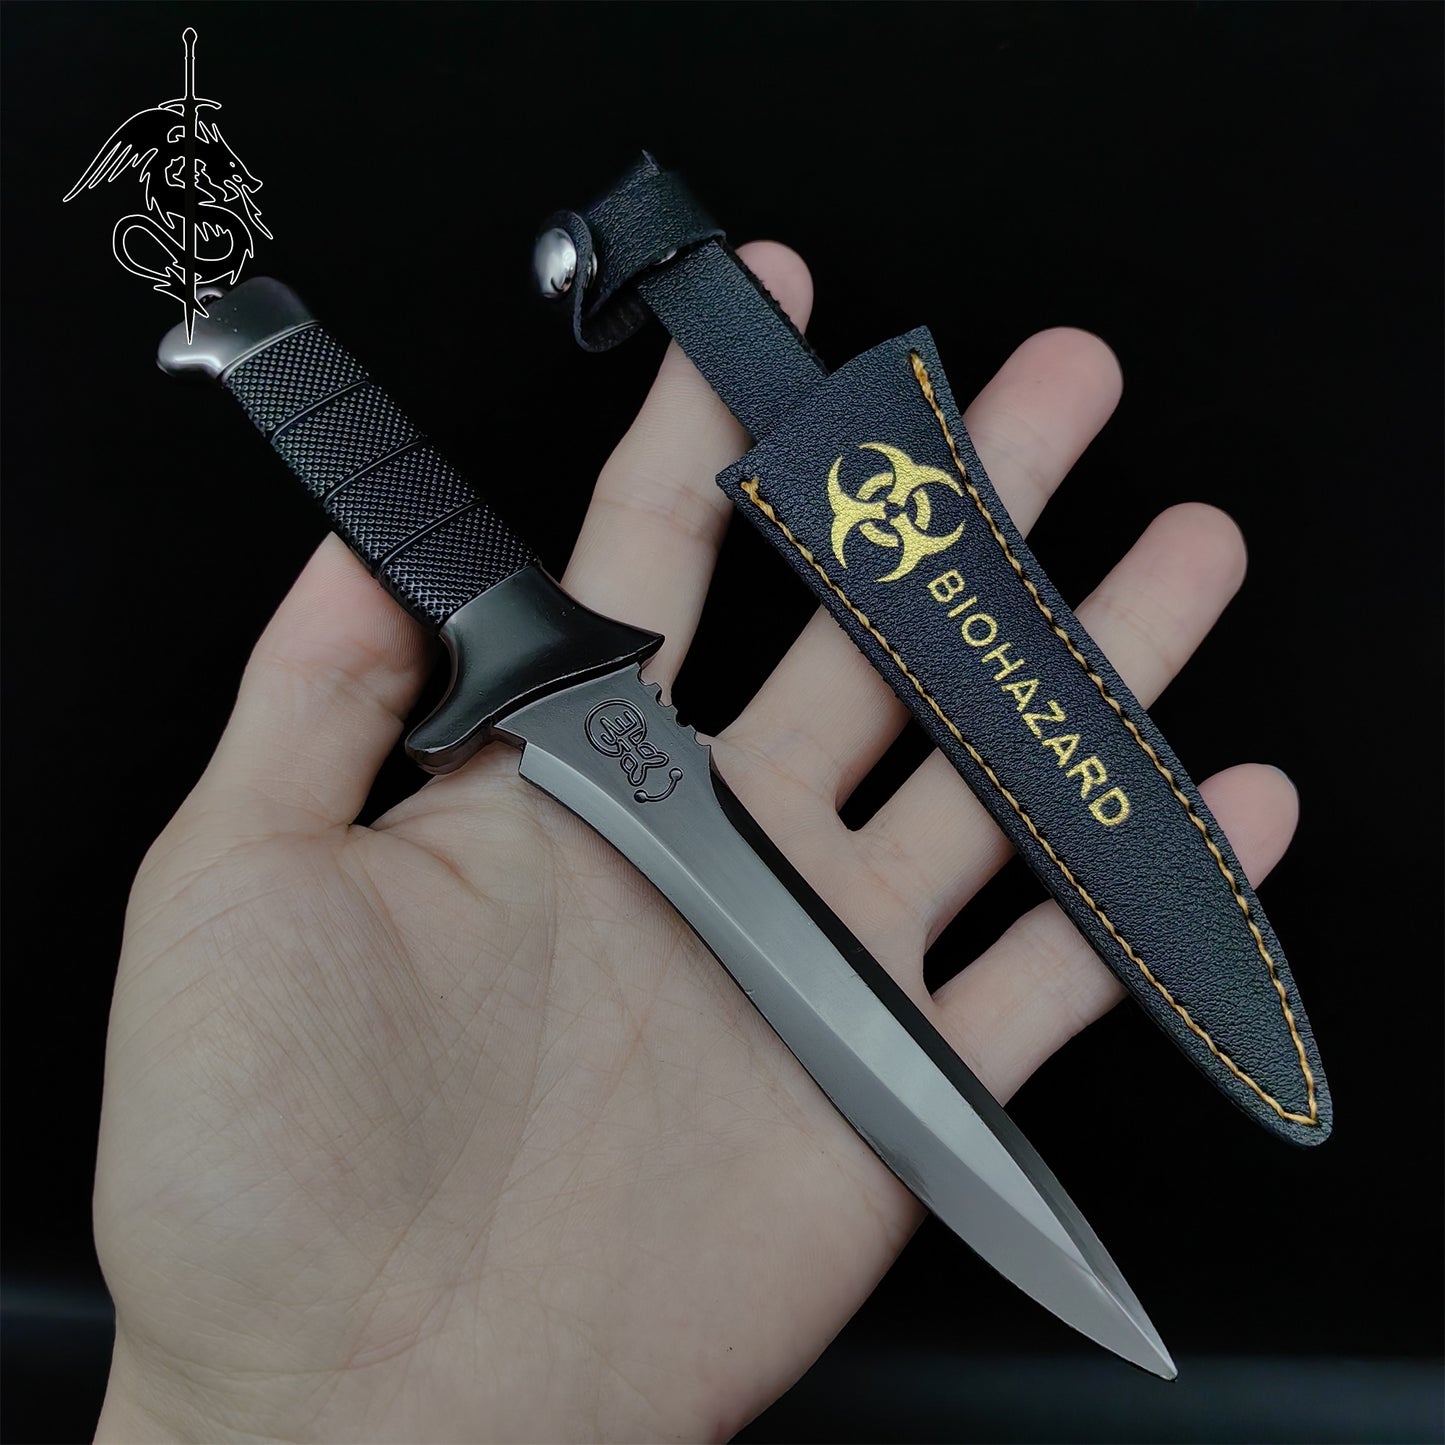 Re4 Primal Knife Krasuer Knife Classical Melee Weapons.